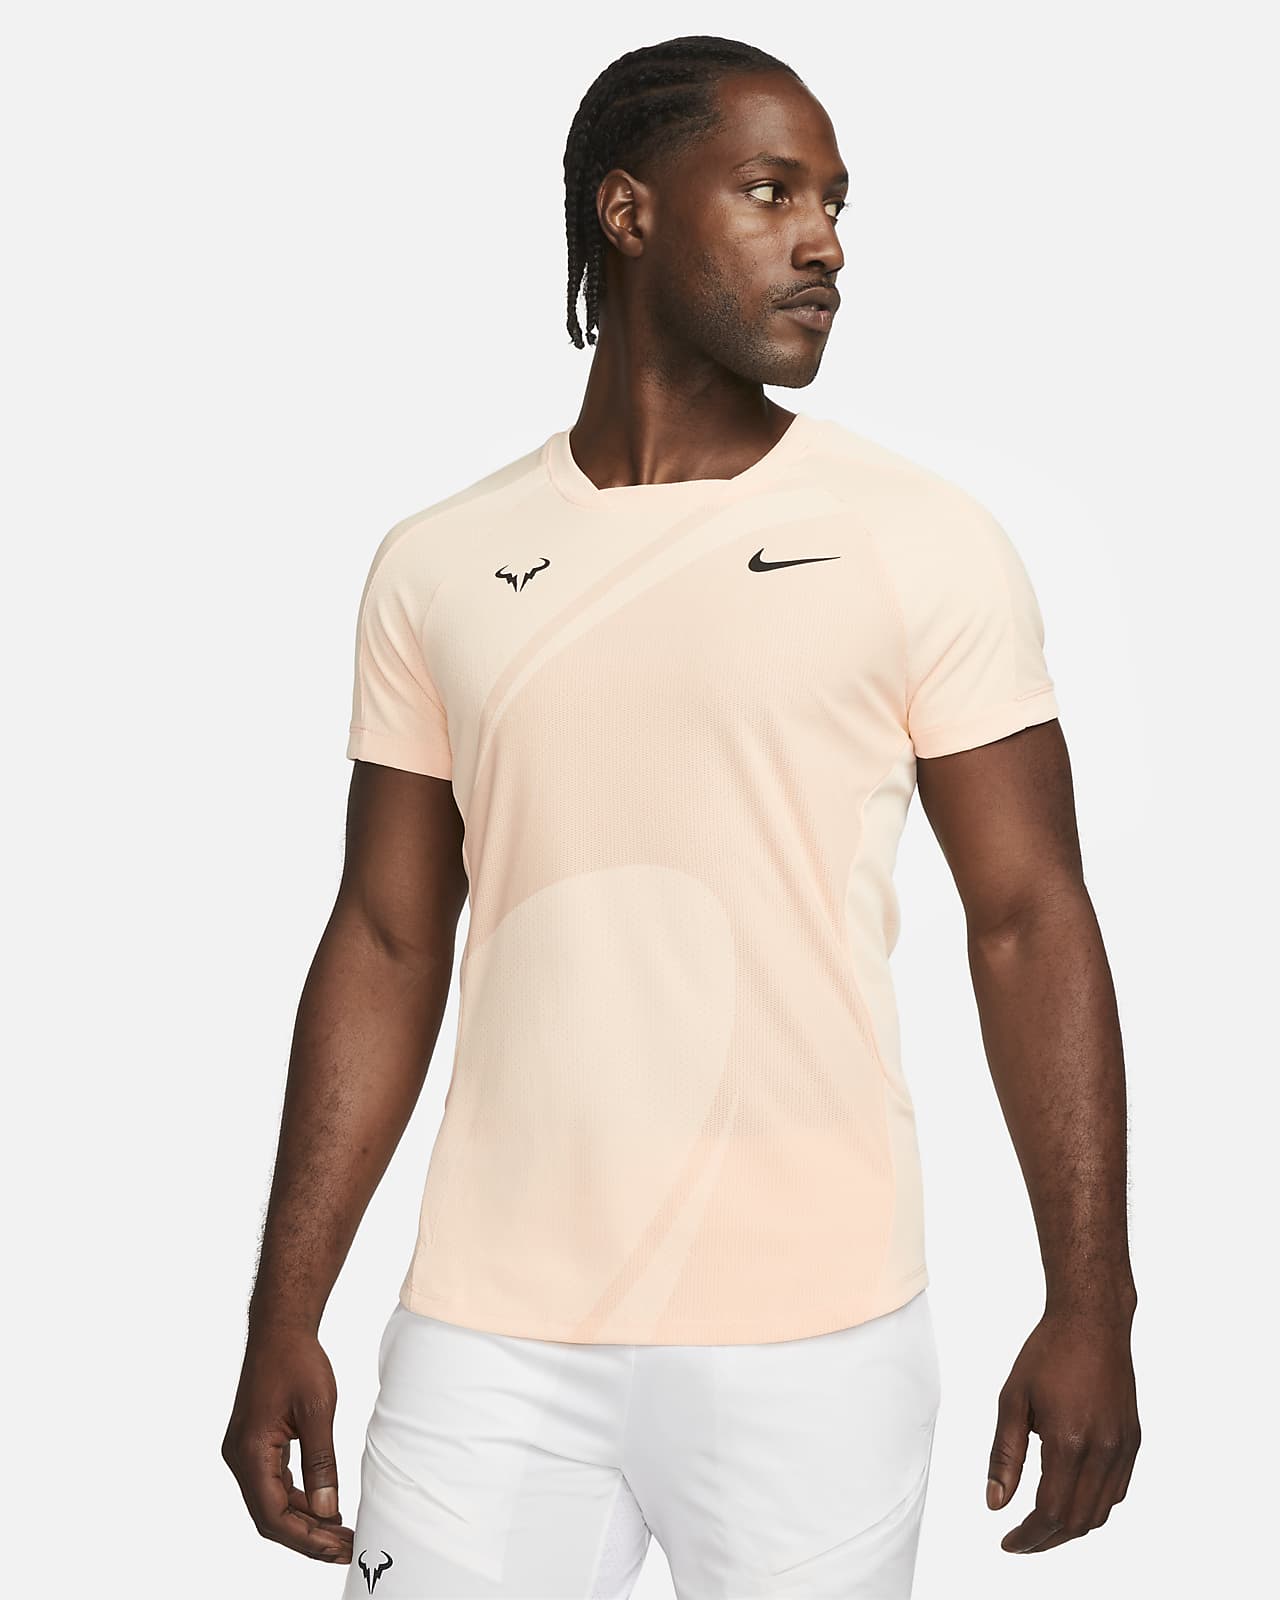 knoop Groenteboer stil Rafa Men's Nike Dri-FIT ADV Short-Sleeve Tennis Top. Nike CA